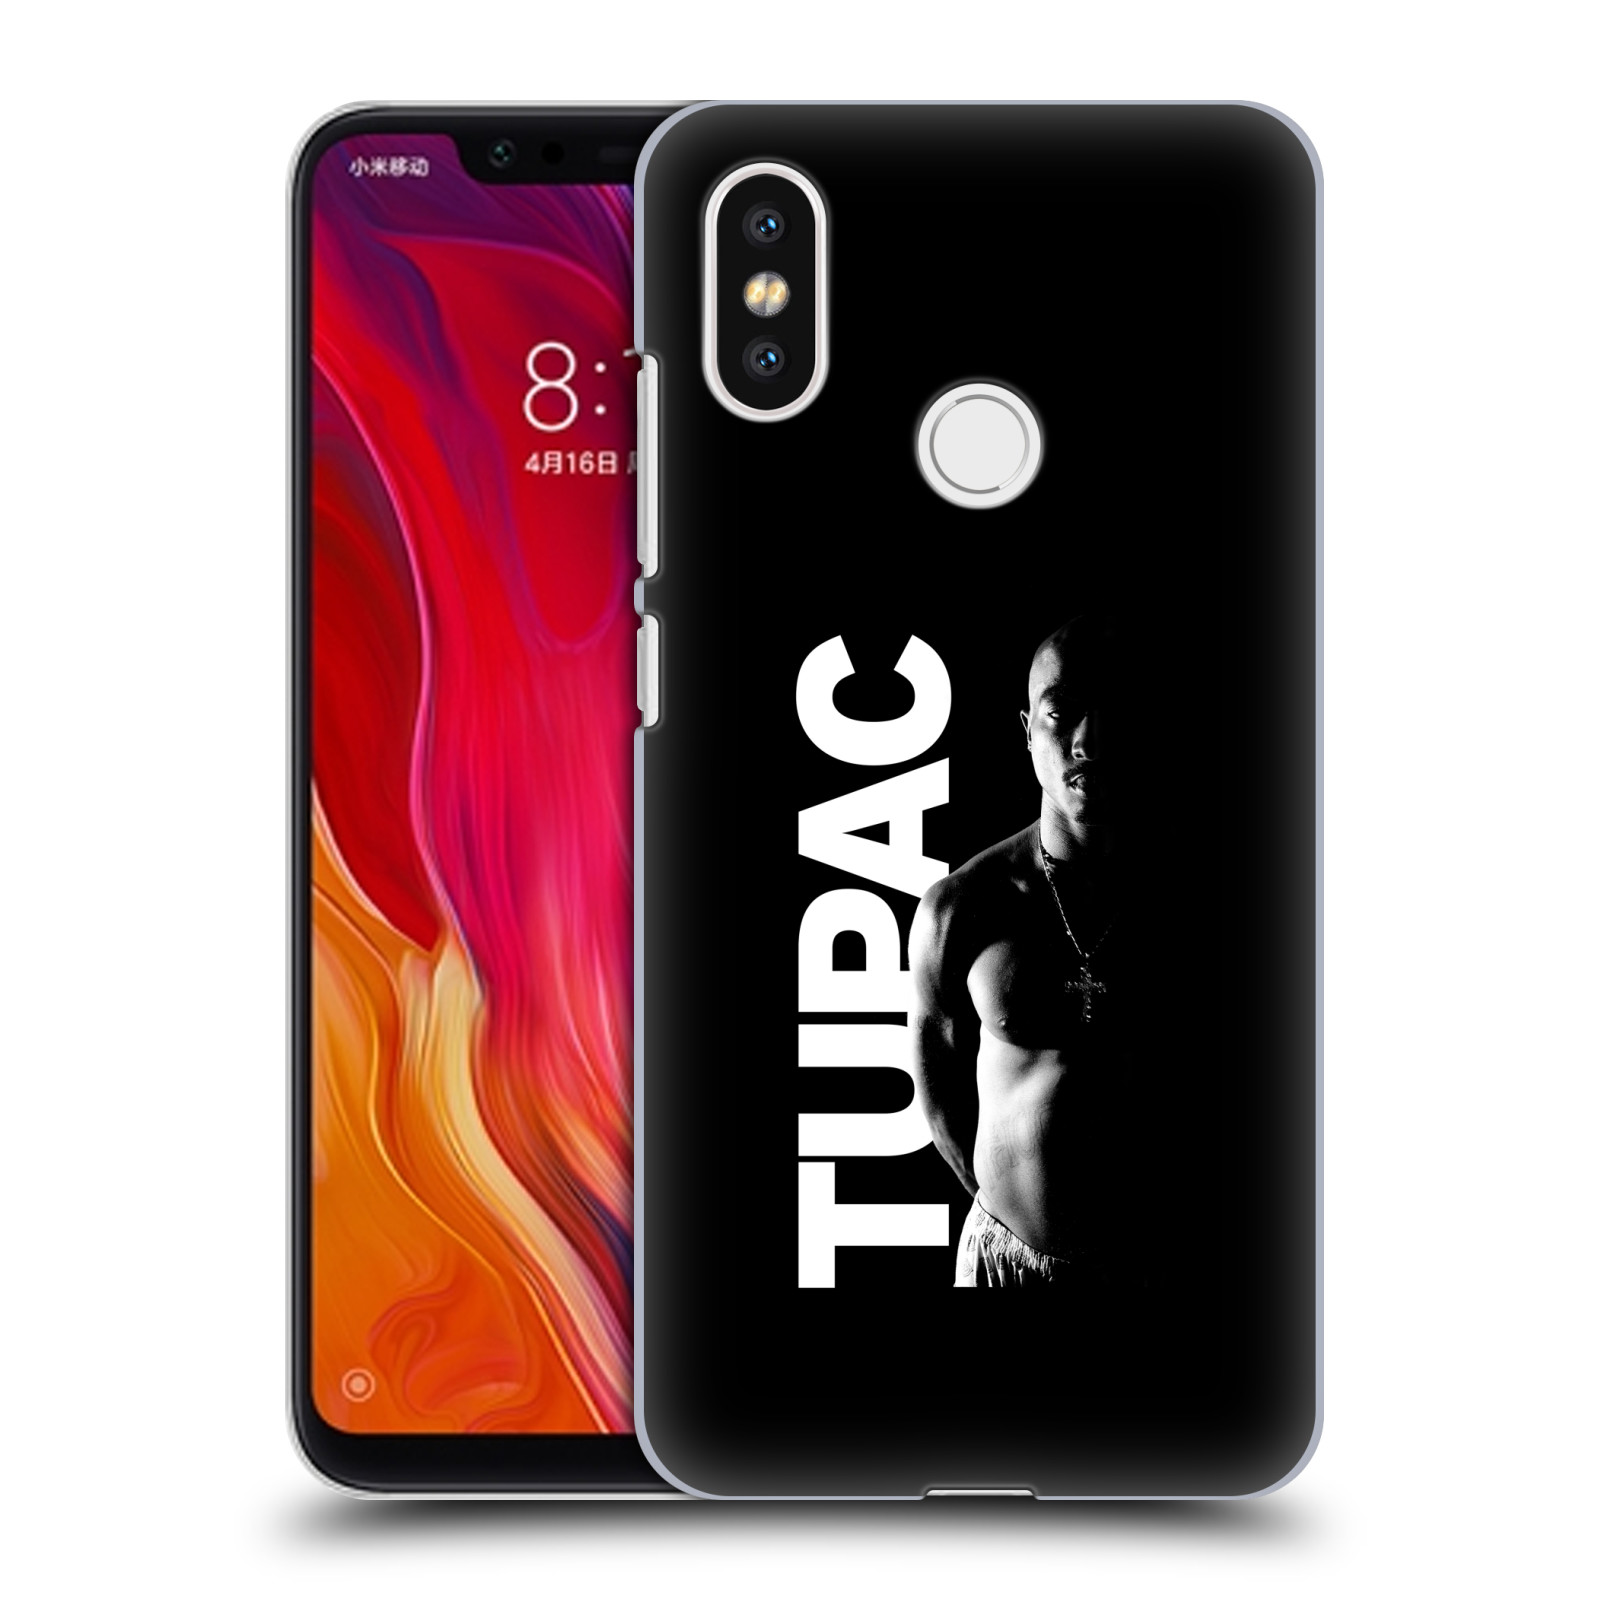 HEAD CASE plastový obal na mobil Xiaomi Mi 8 Zpěvák rapper Tupac Shakur 2Pac bílý nadpis